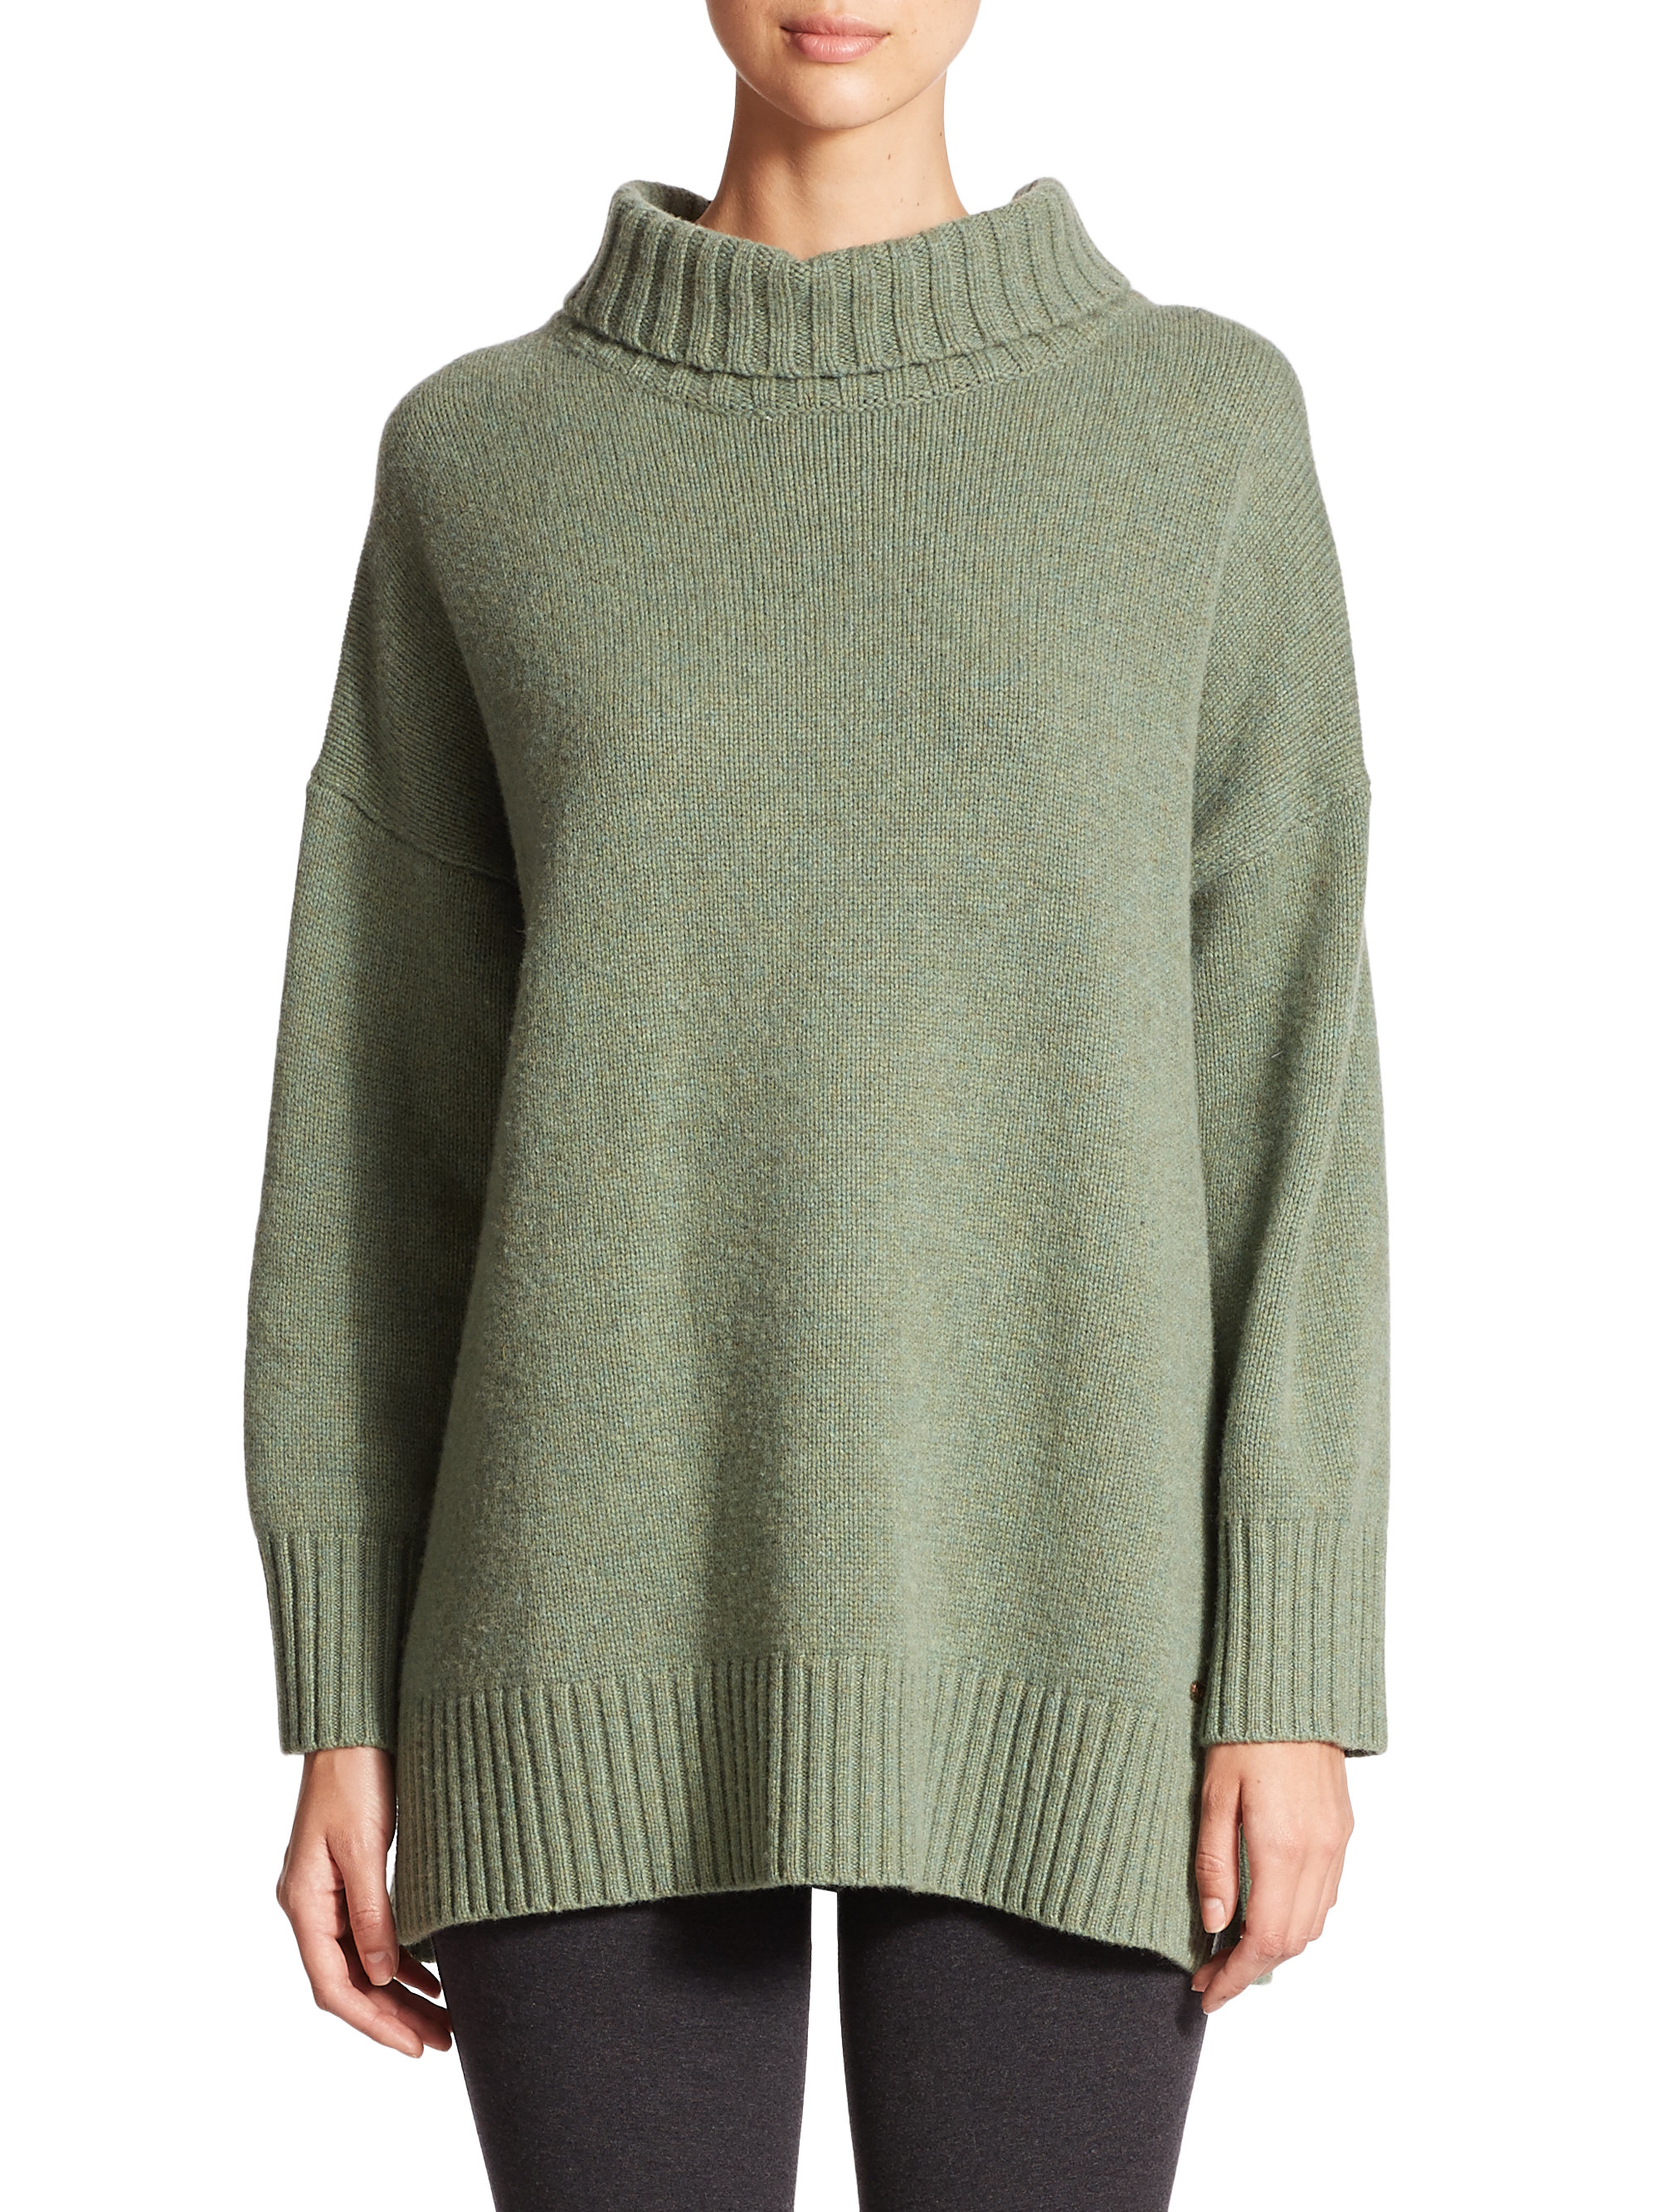 Polo ralph lauren Wool & Cashmere Oversized Turtleneck Sweater in ...